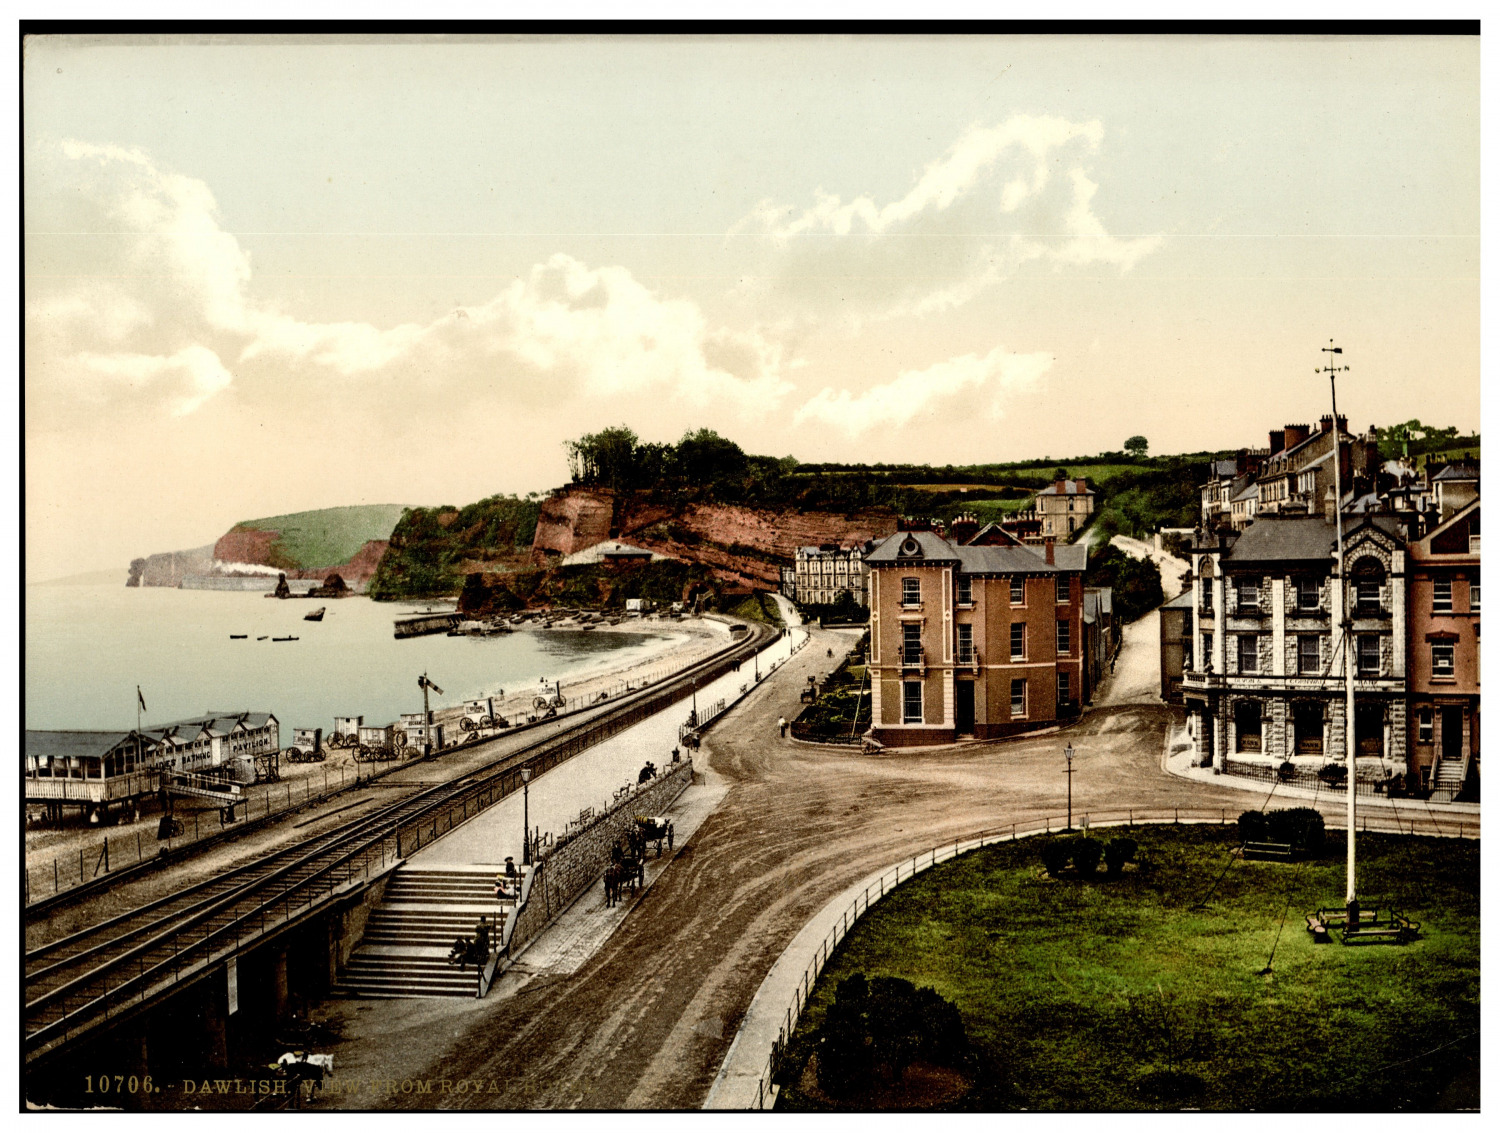 England. Dawlish from Royal Hotel. Vintage Photochrome by P.Z, Photochrome Zuri